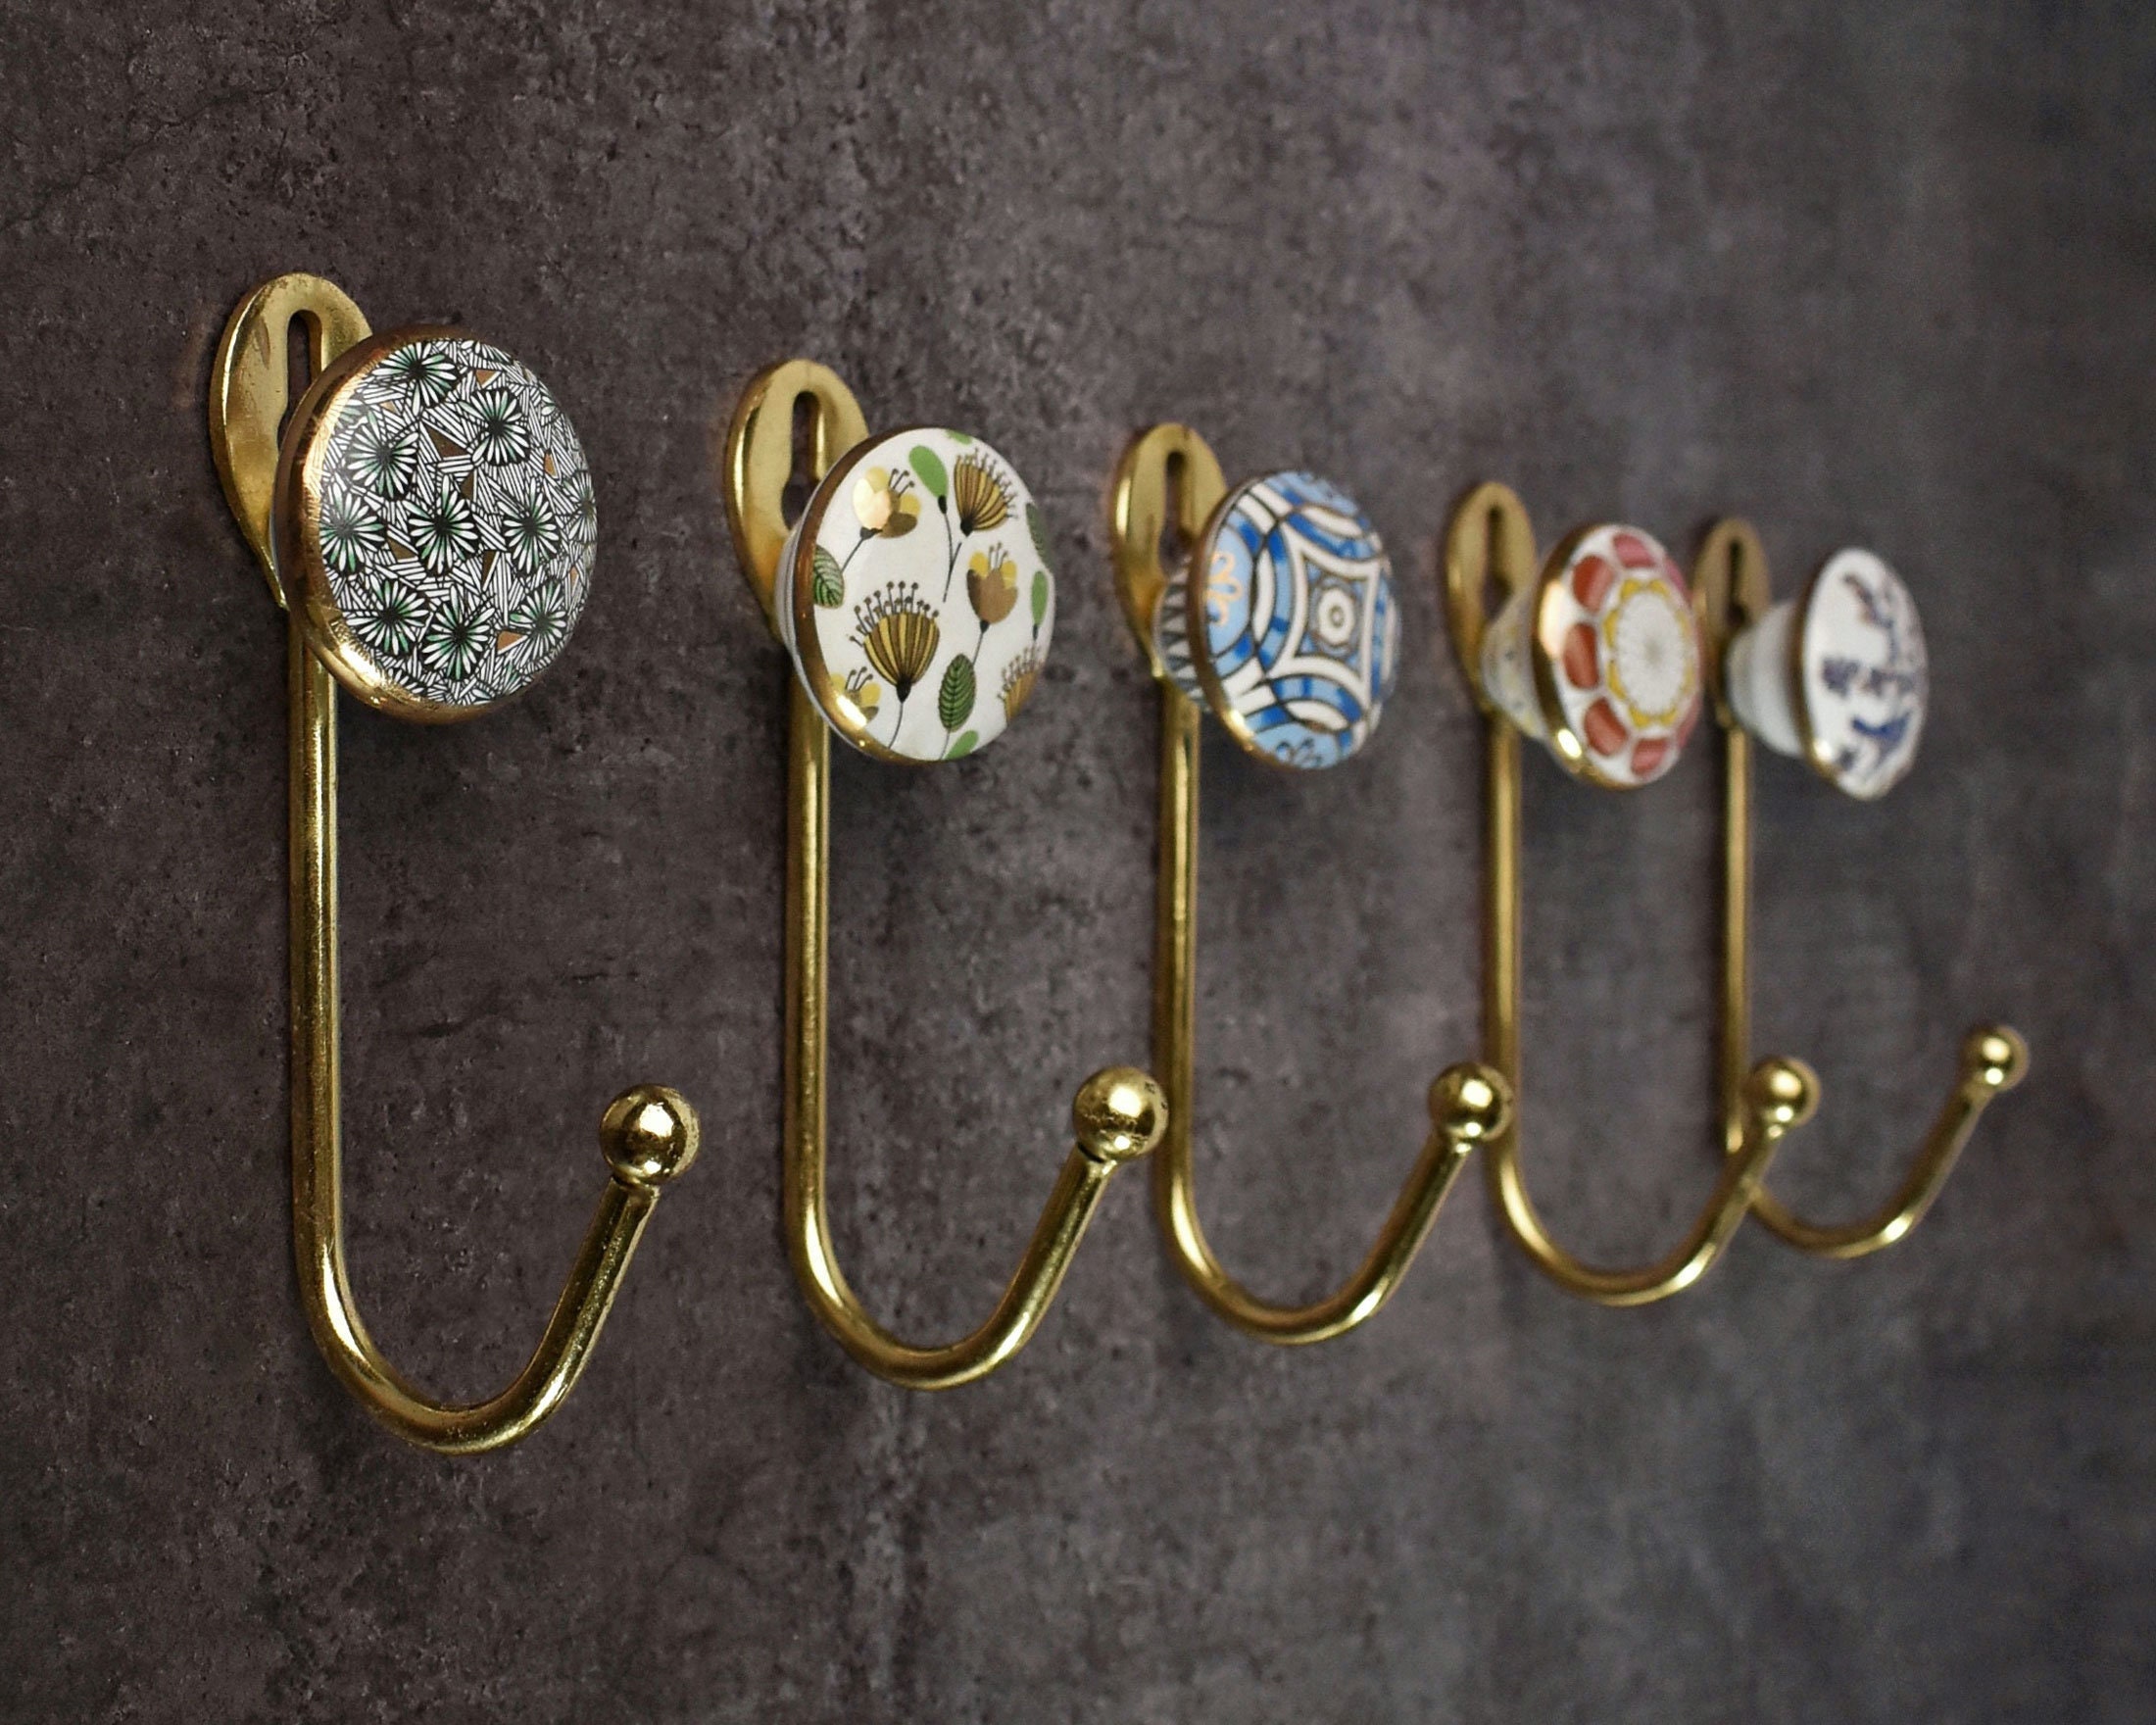 Decorative Ceramic Gold Coat Hooks Vintage Wall Hooks Coat